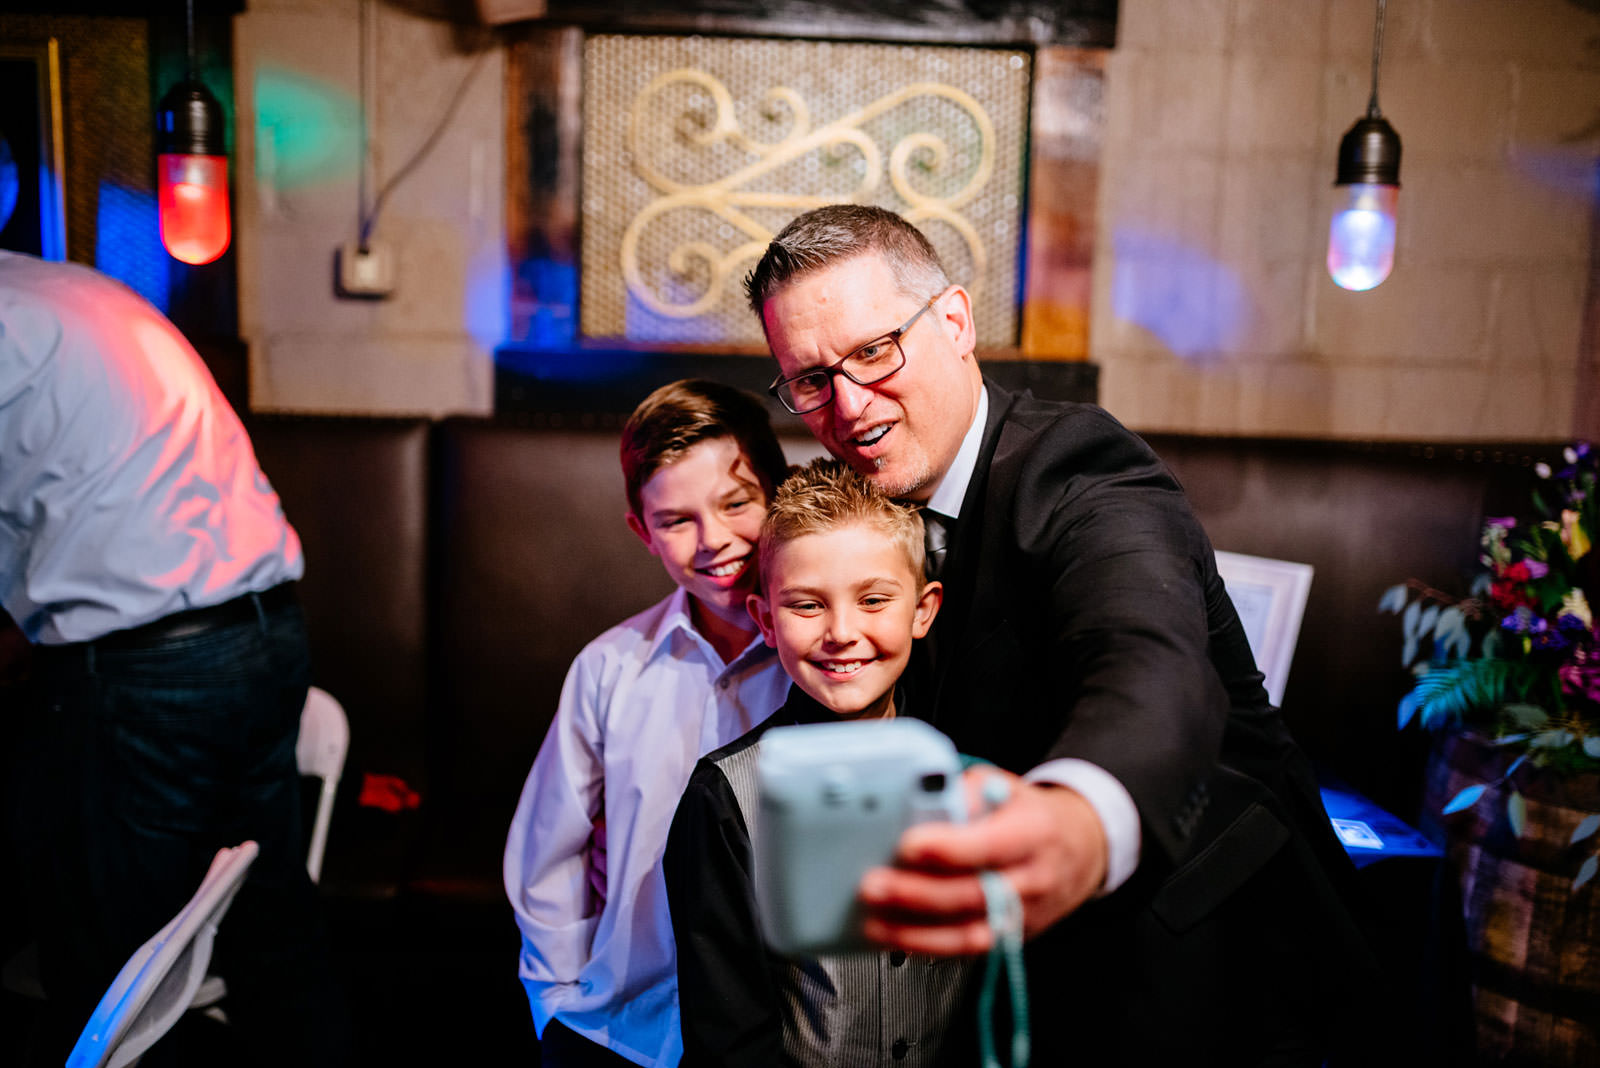 wedding guests using instax camera selfie